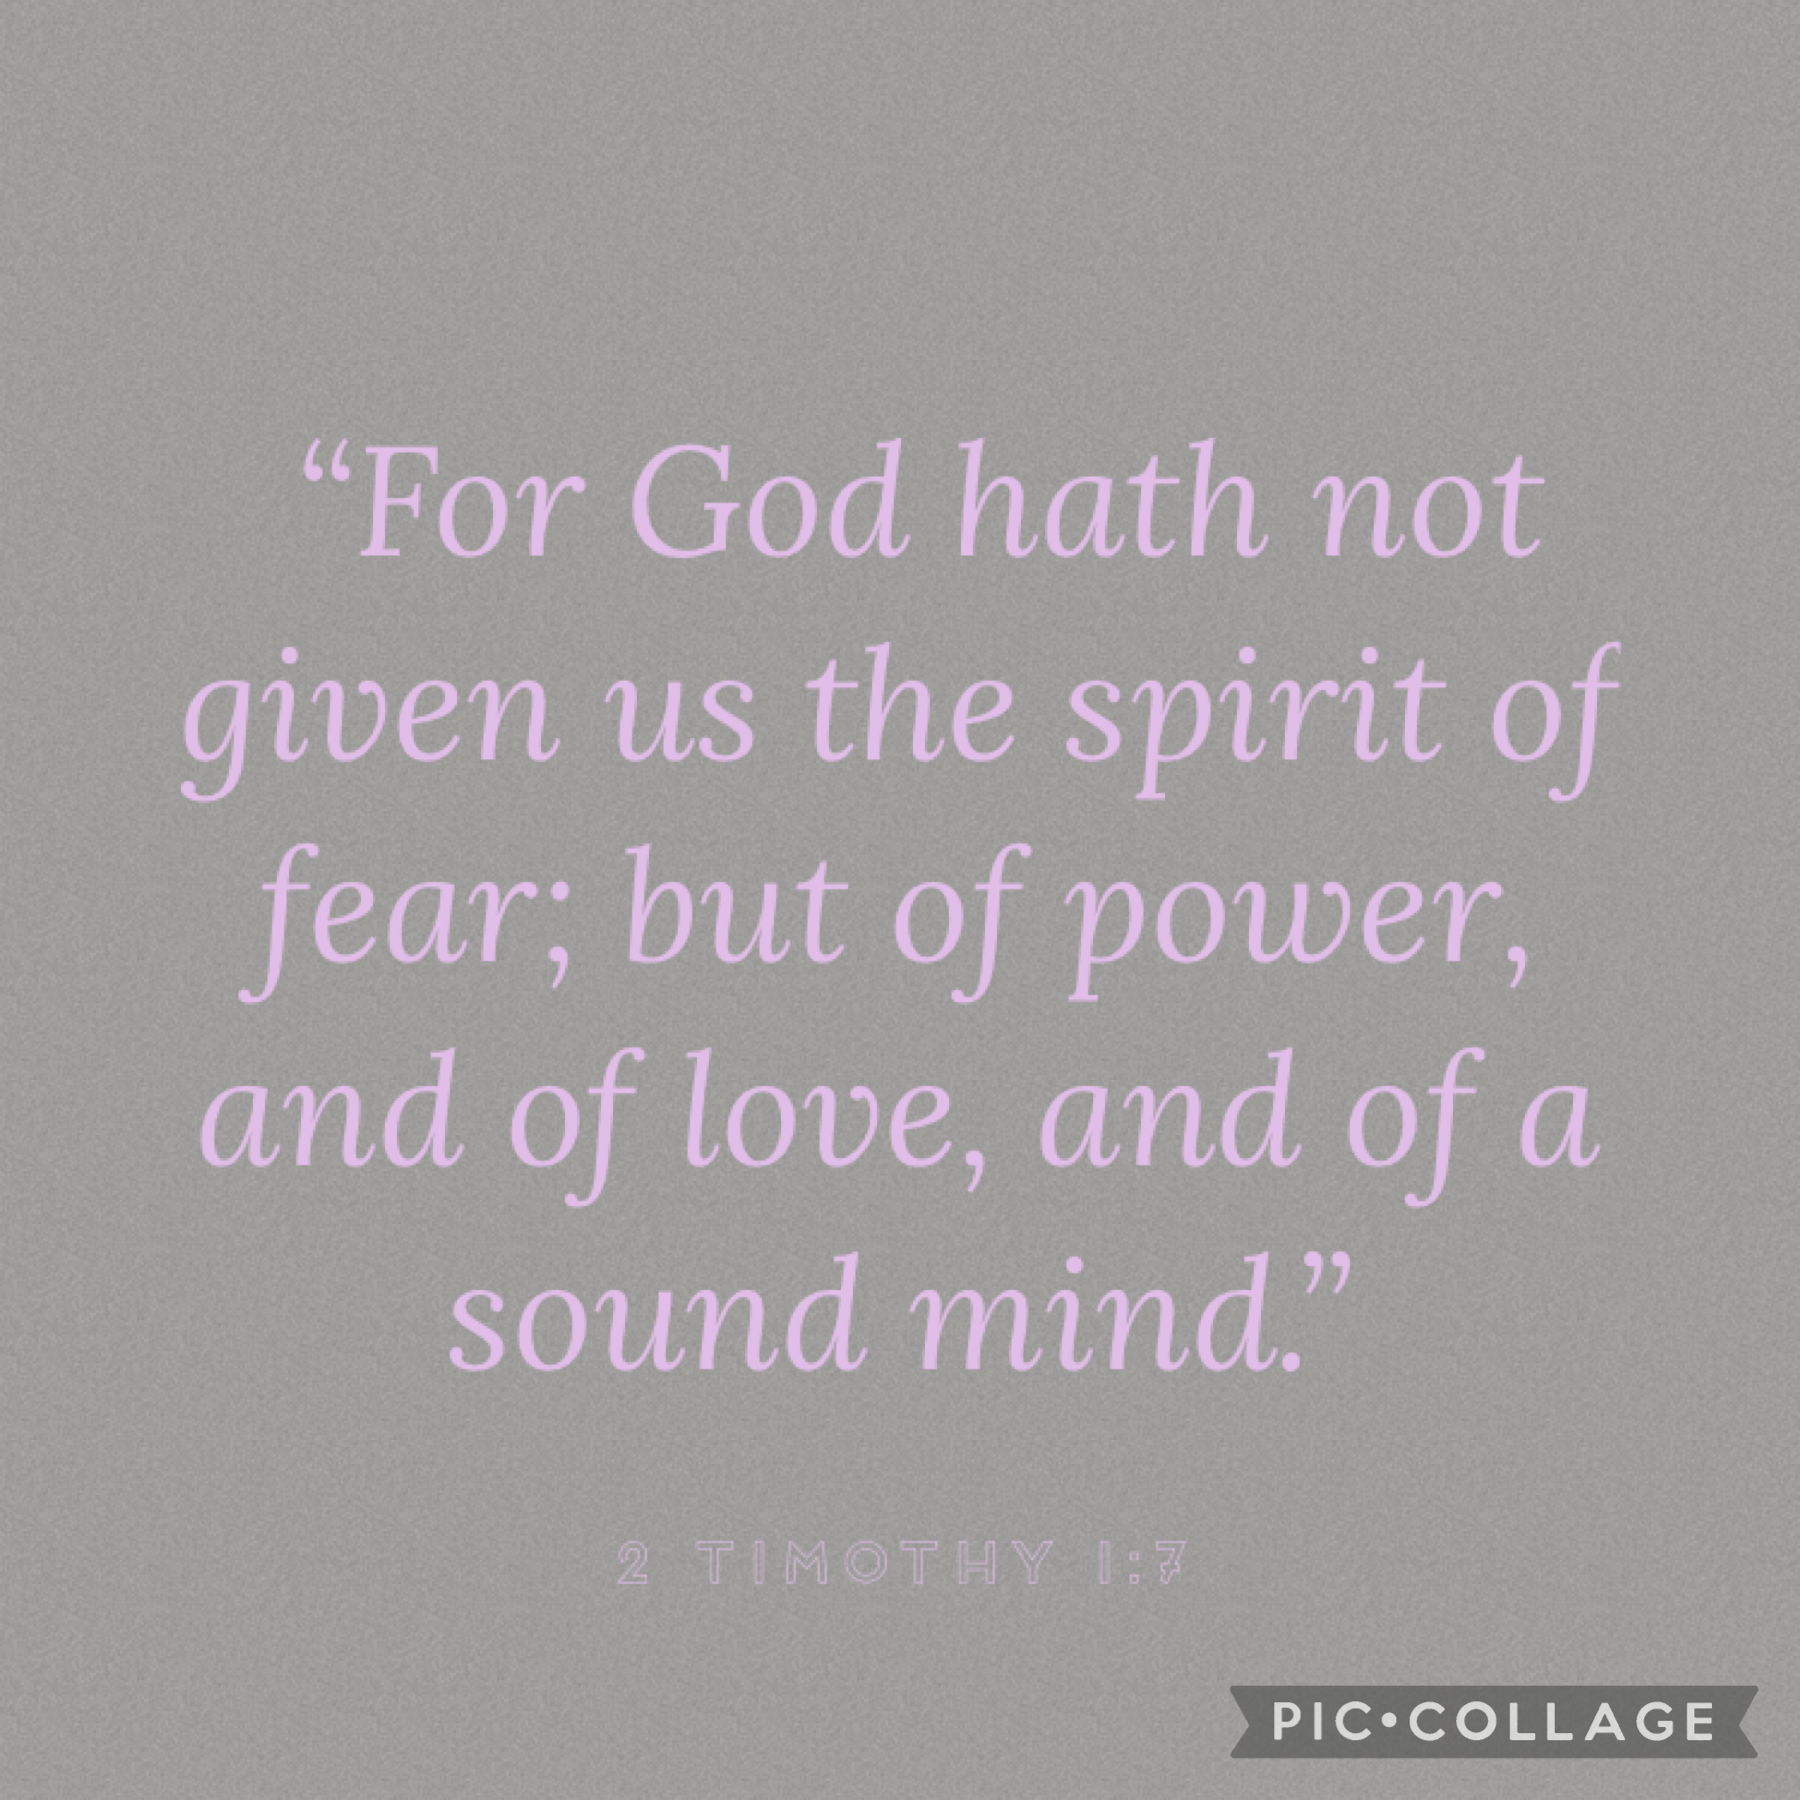 2 timothy 1:7 🤍